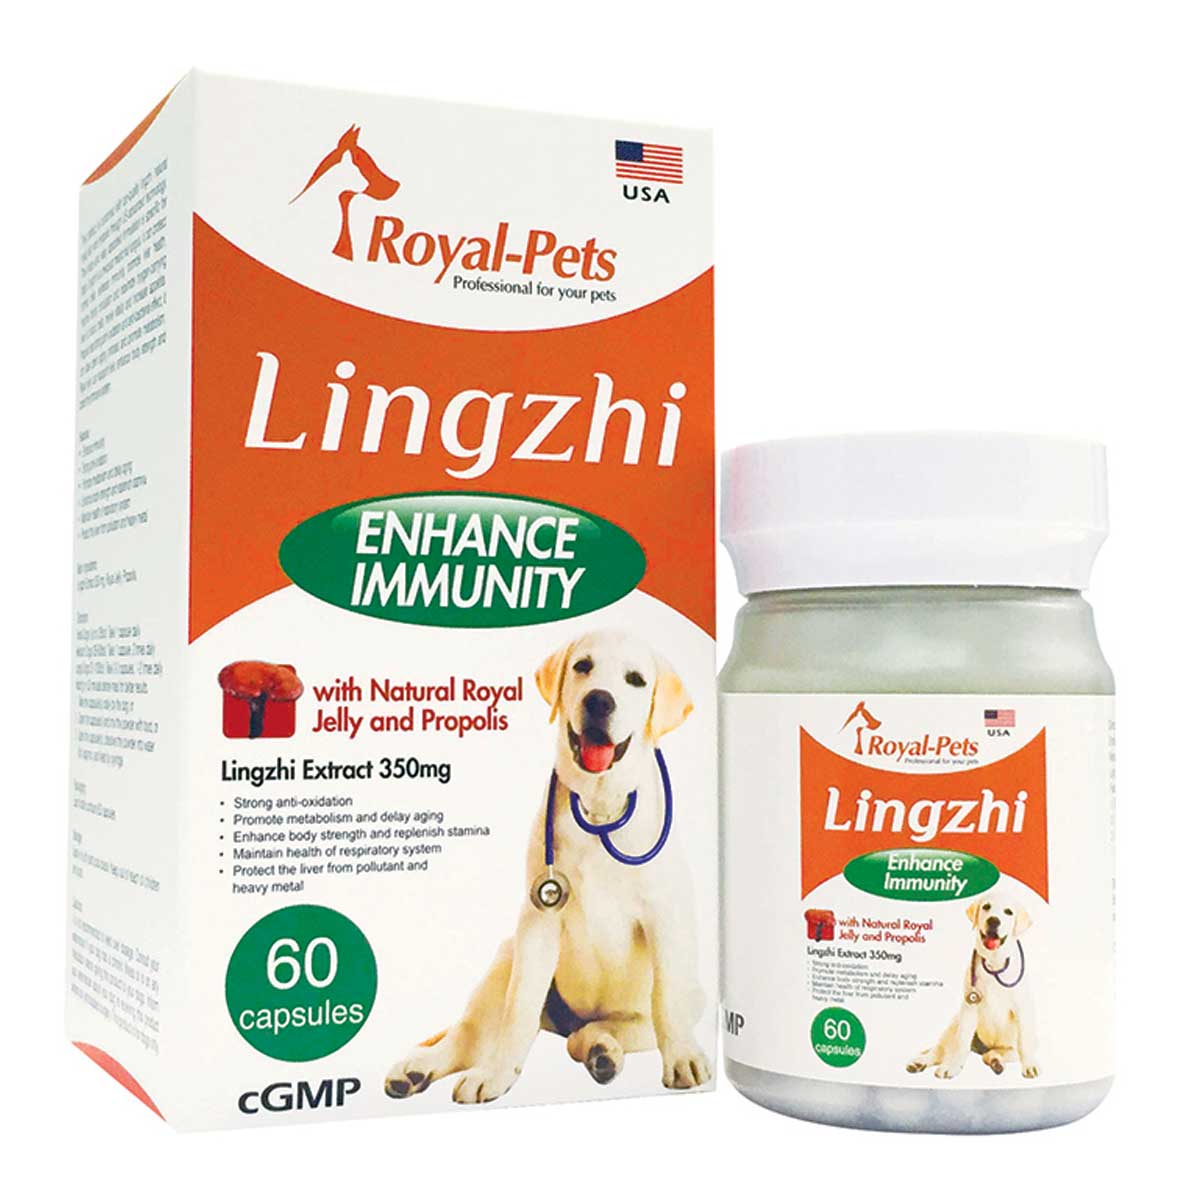 MAMA730 Royal-Pets 純正靈芝 60粒膠囊 Royal-Pets Lingzhi 60 capsules